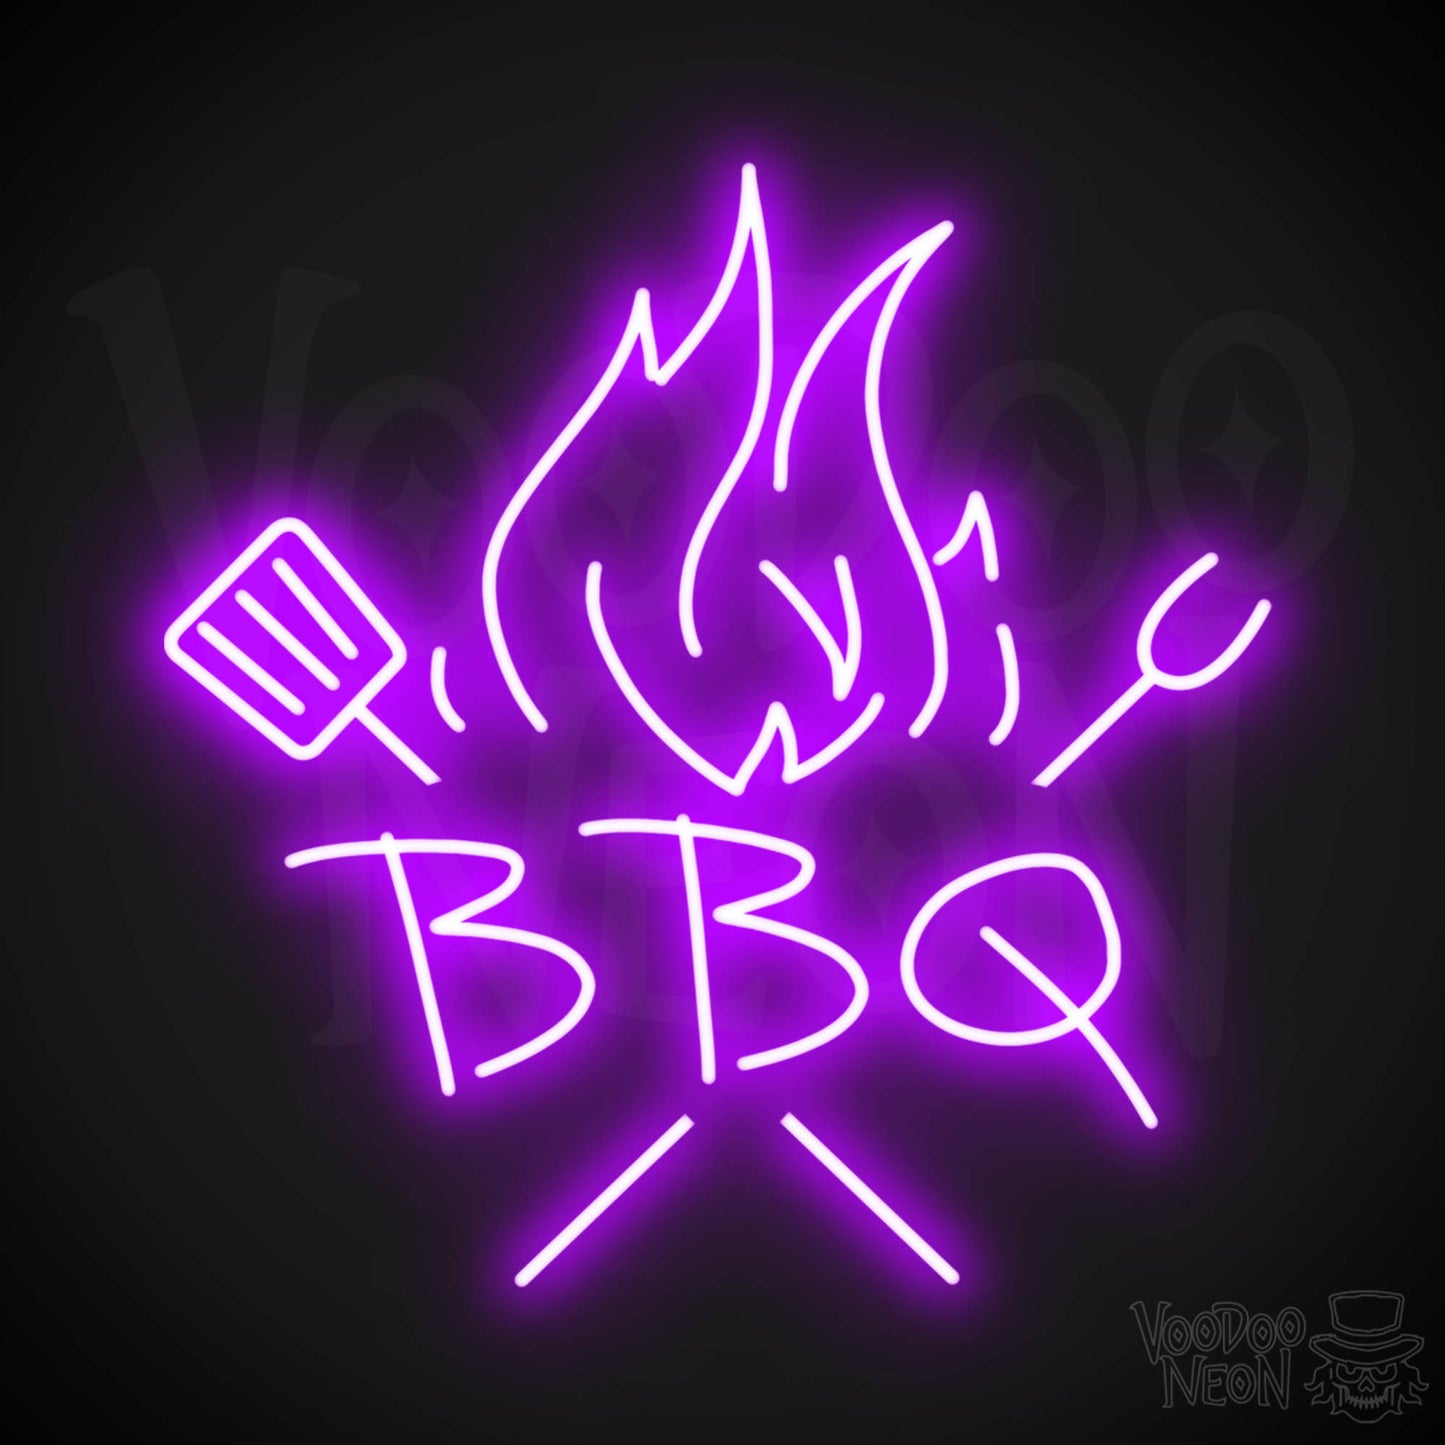 BBQ LED Neon - Purple